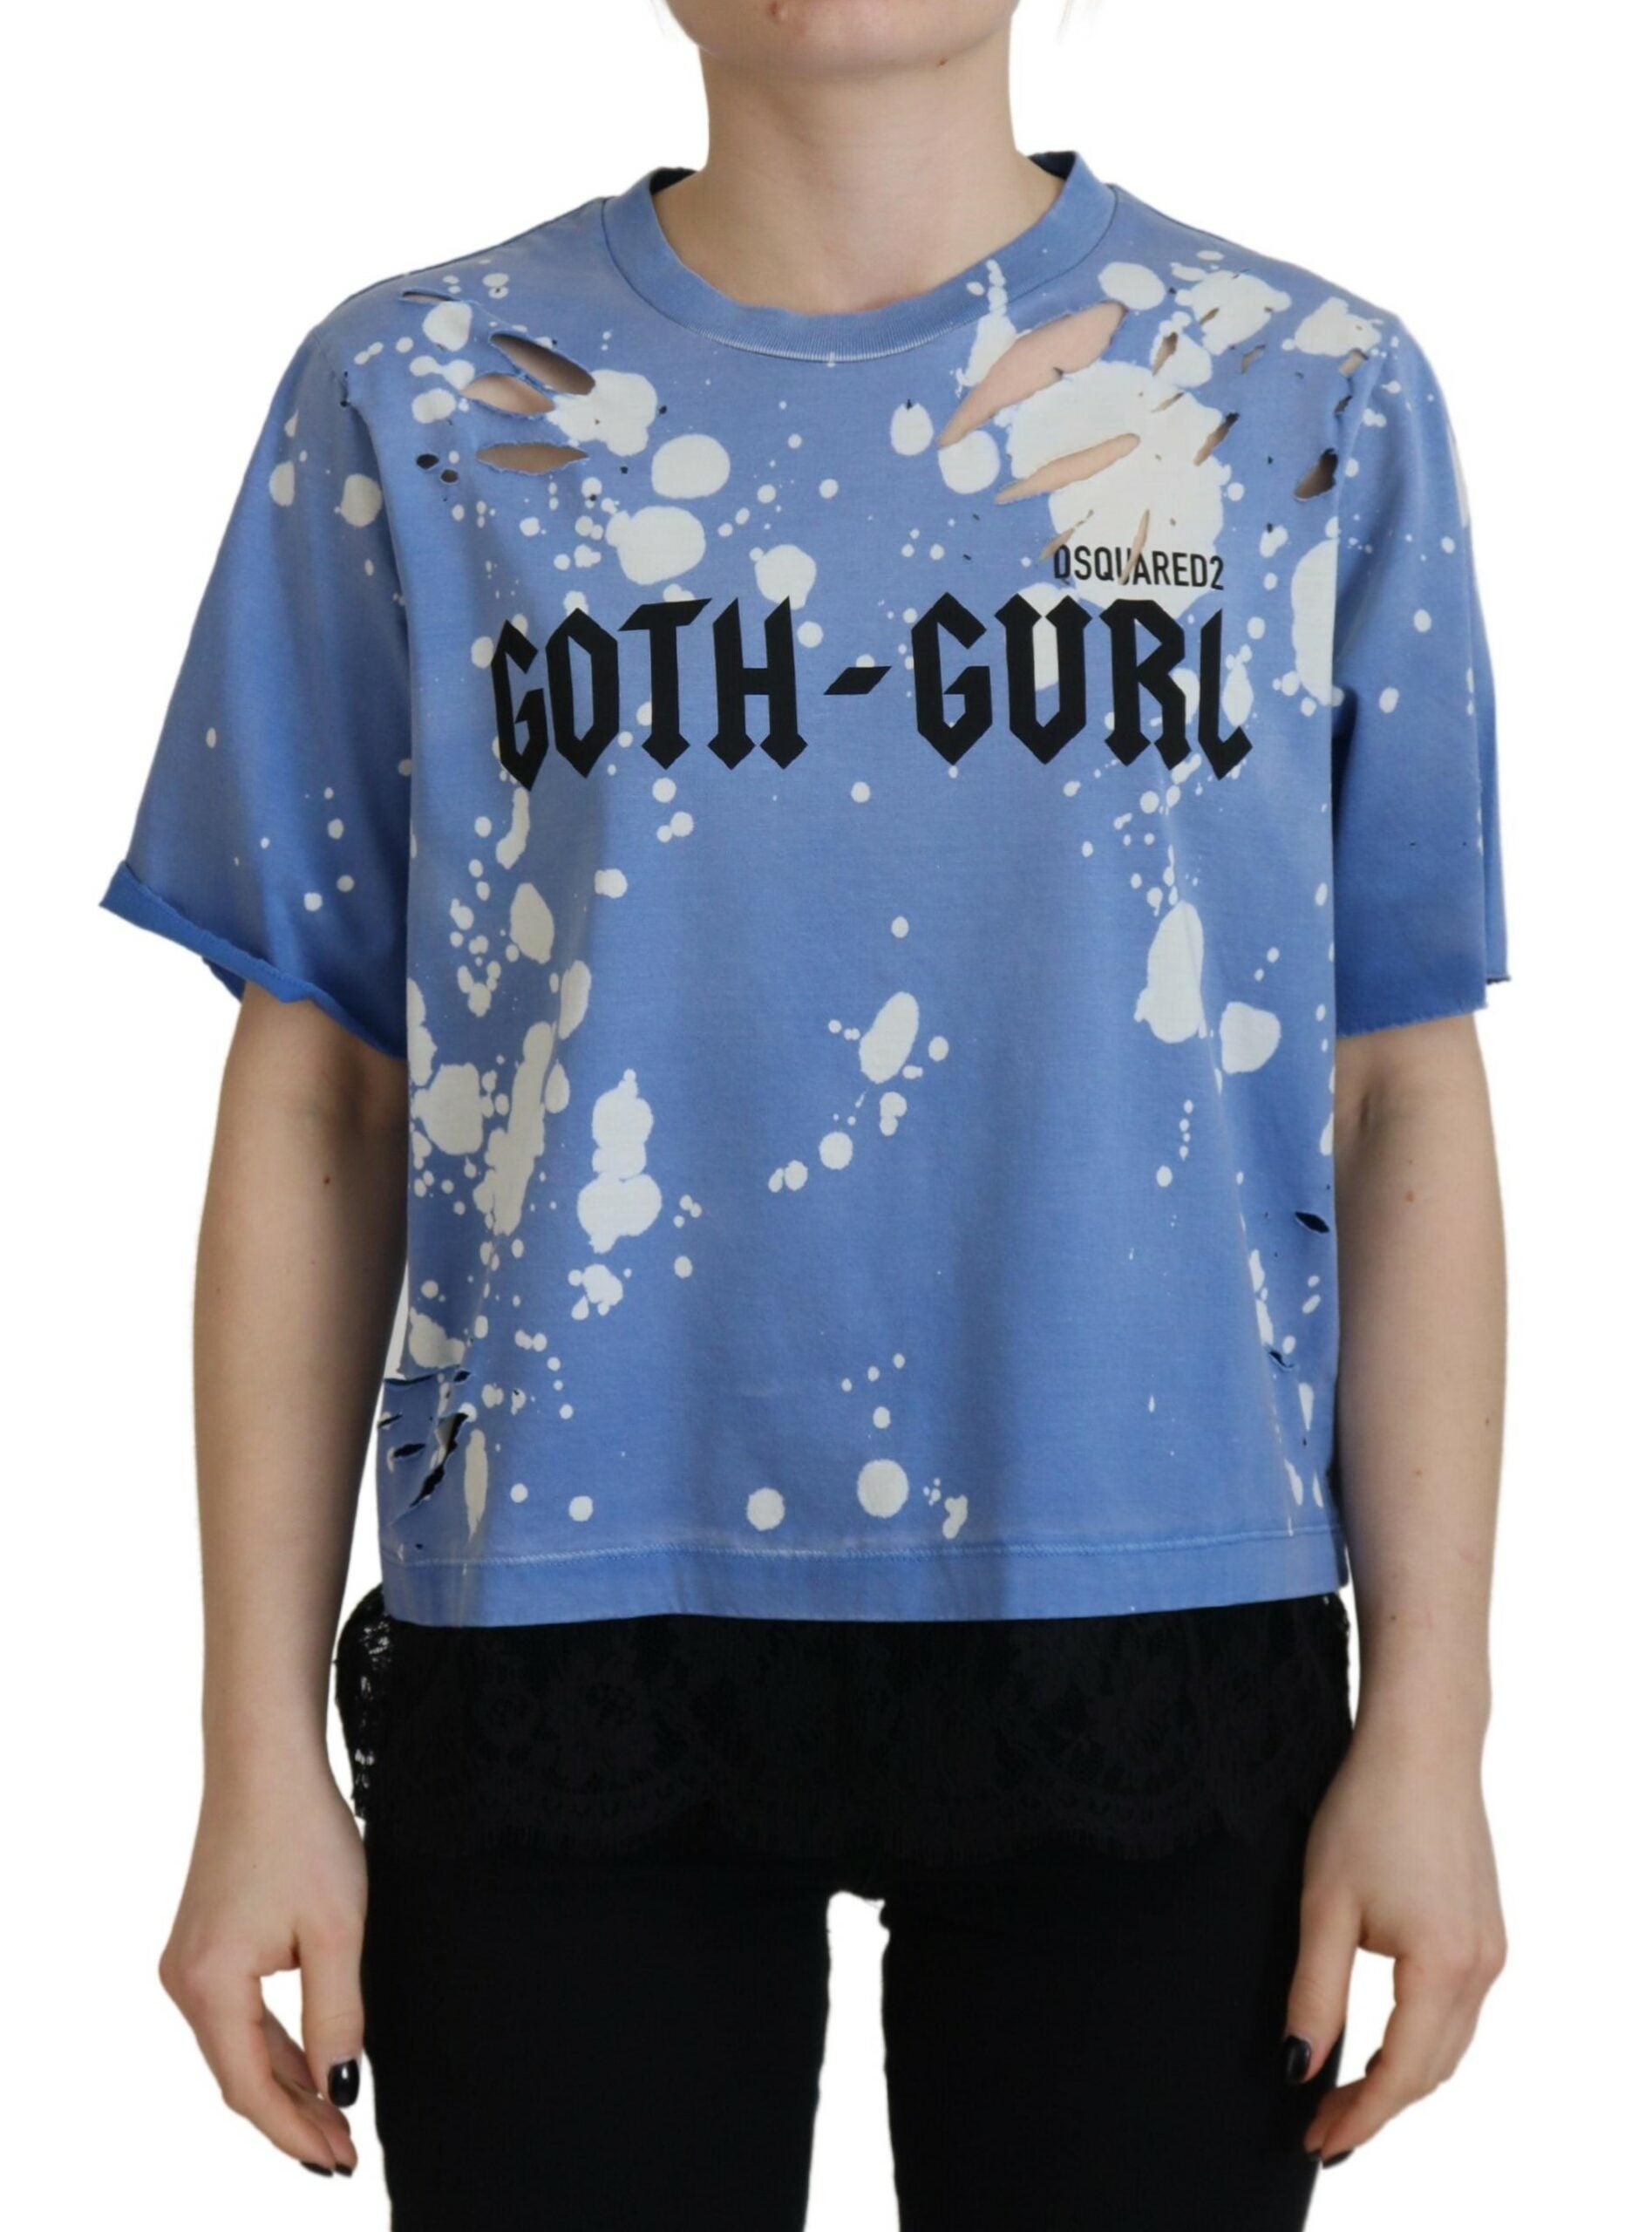 Dsquared² Blue Goth Gurl Print Black Lace Cotton Tee T-shirt